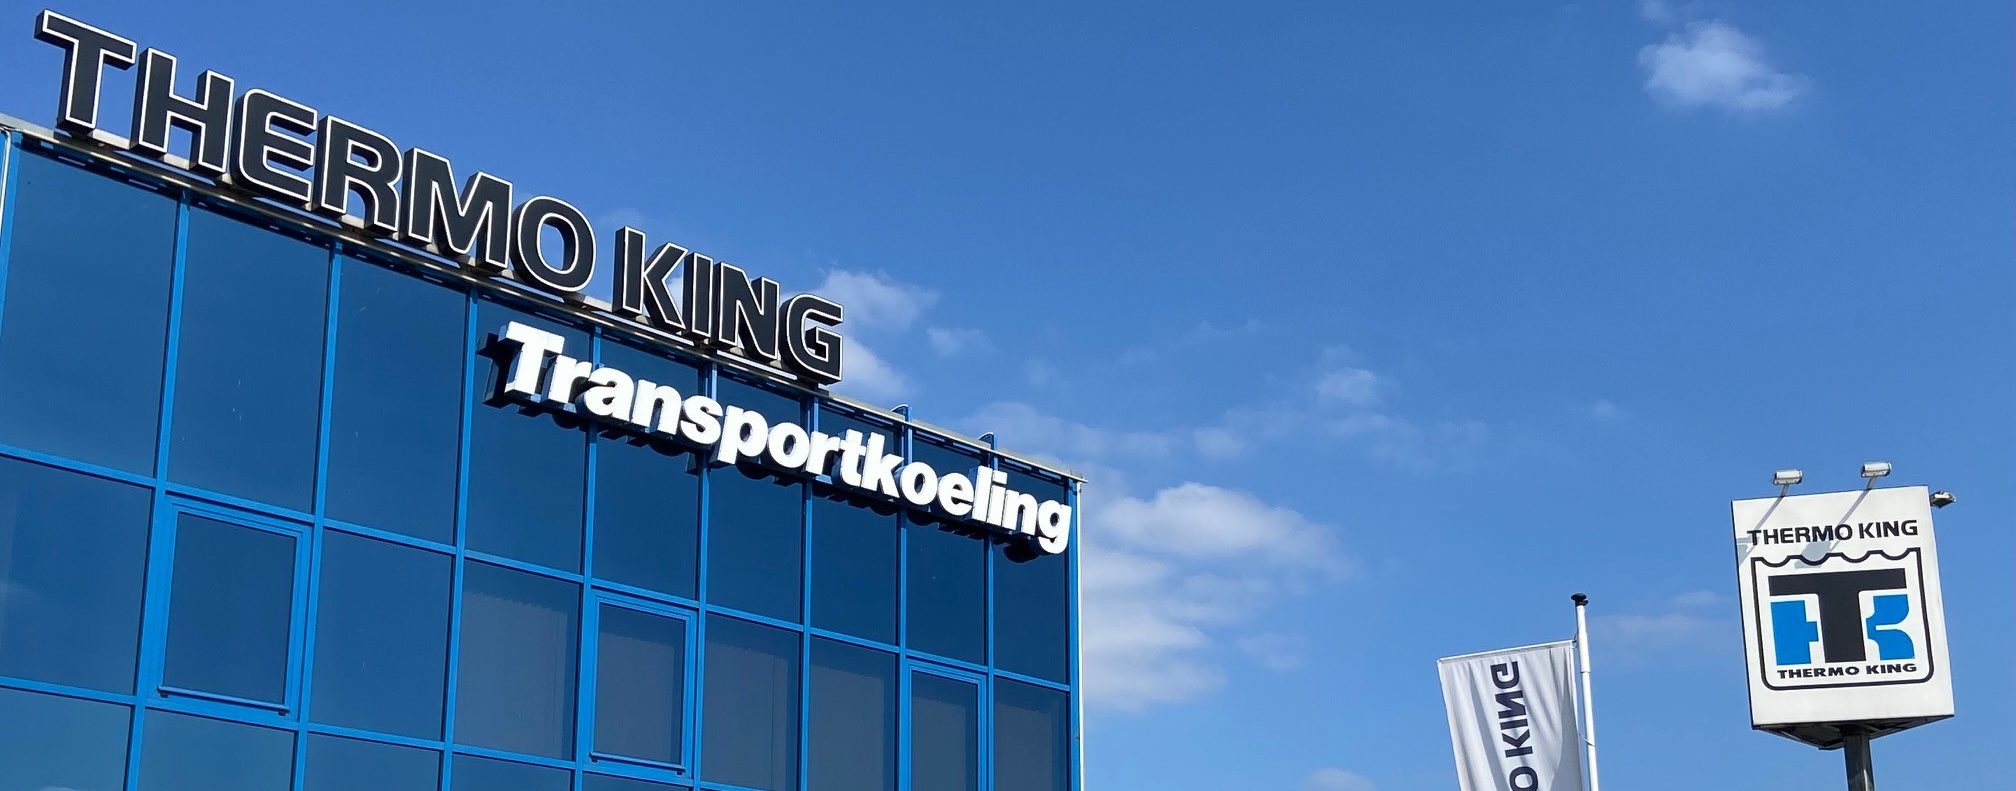 Thermo King Transportkoeling Hoofdkantoor Rotterdam